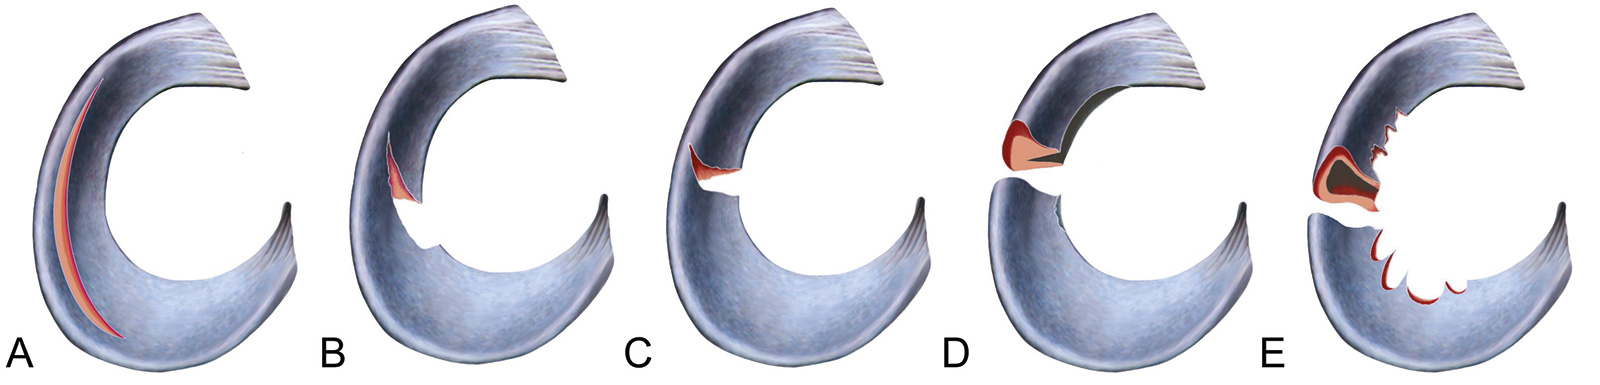 Abb. 2-49: Rupturformen: Korbhenkelriss (A), Lappenriss (B), Radiärriss (C), Horizontalriss (D), degenerative Meniskusveränderungen (E)